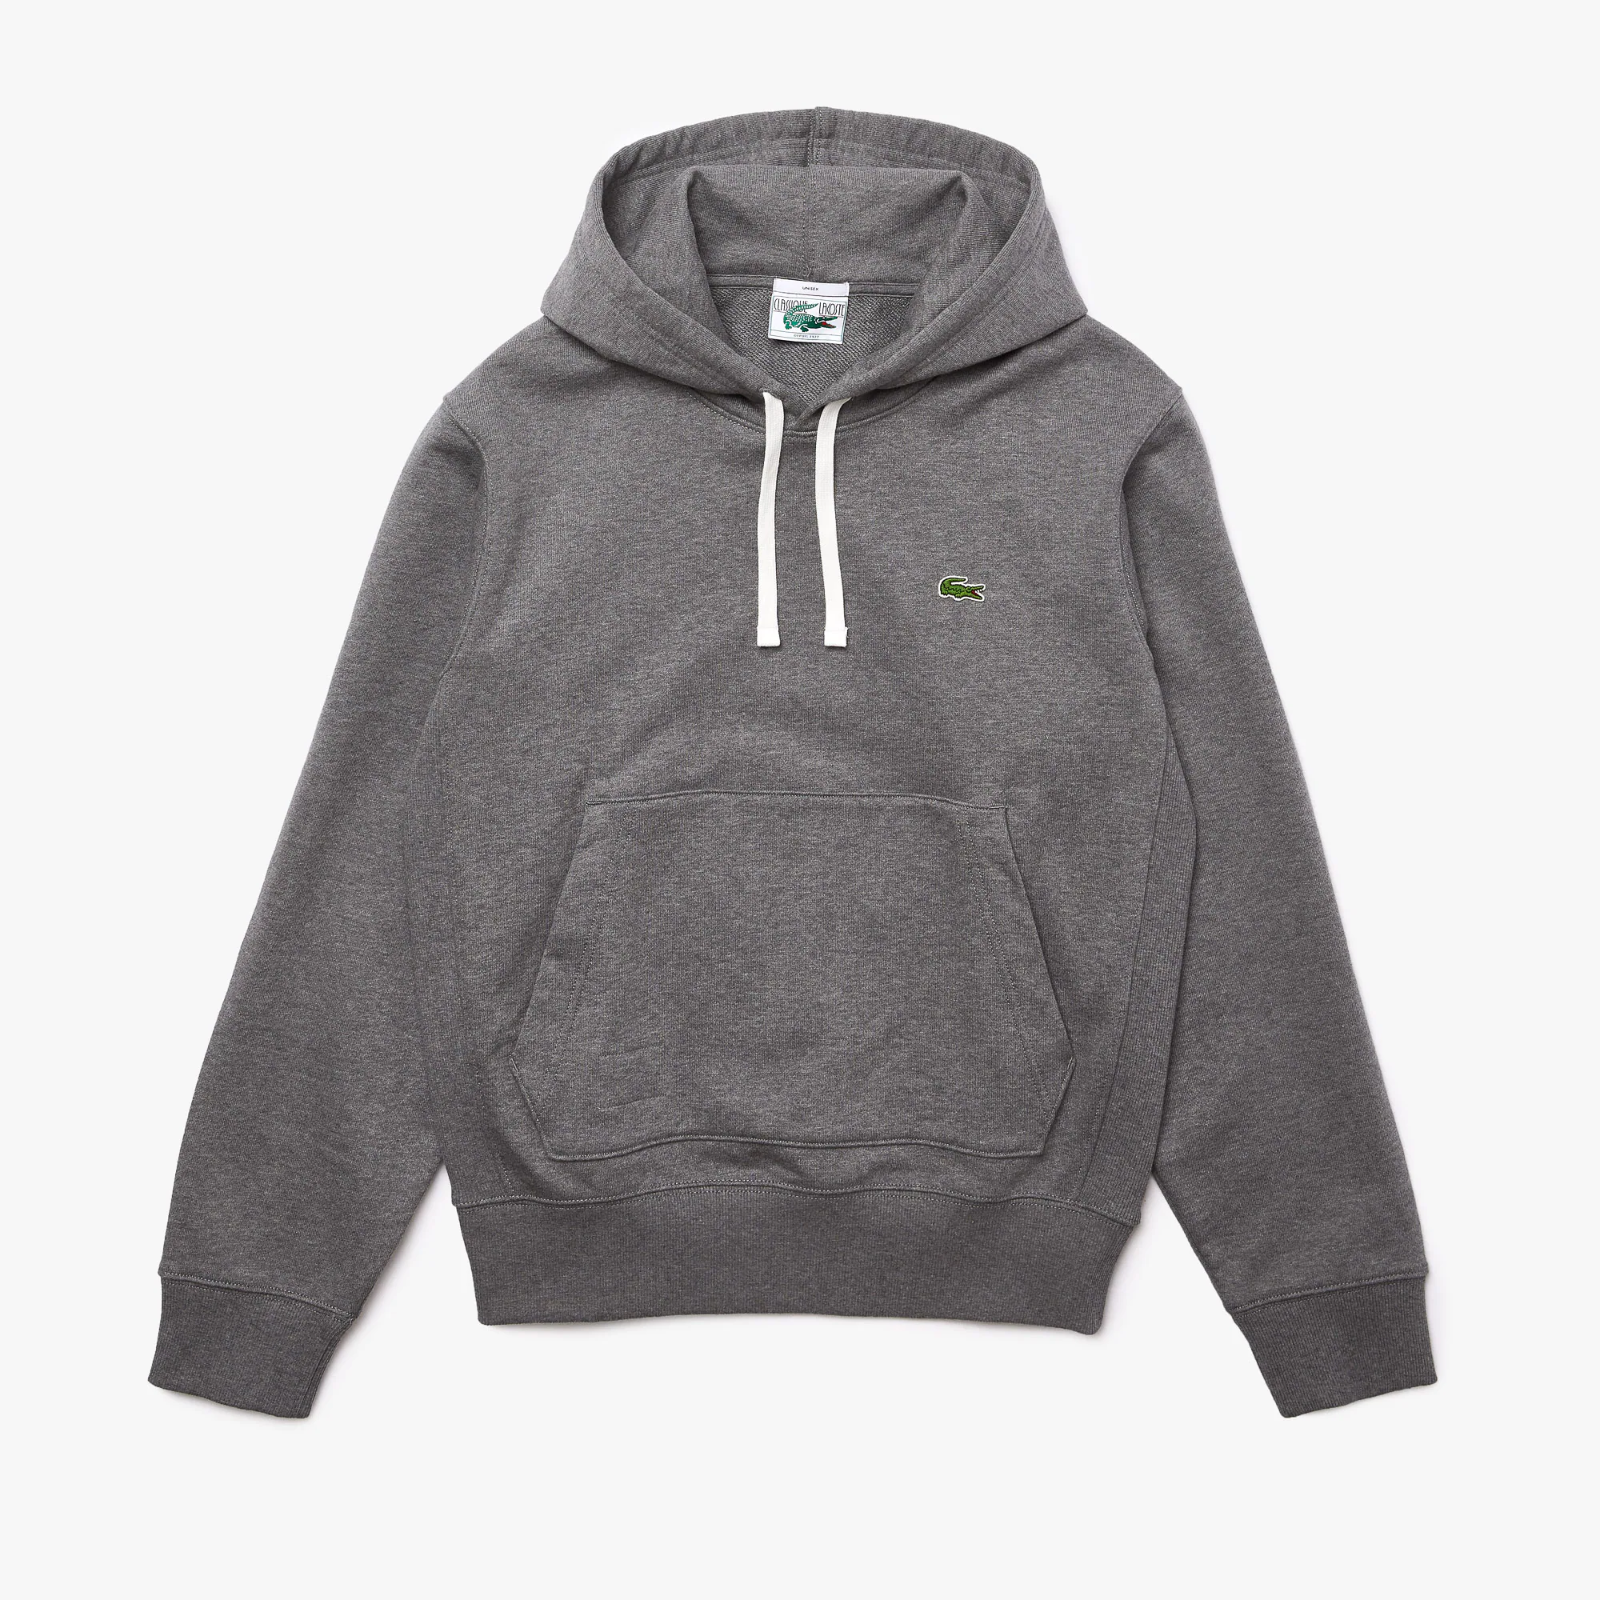 Unisex Hooded Organic Cotton Sweatshirt SH1701-51